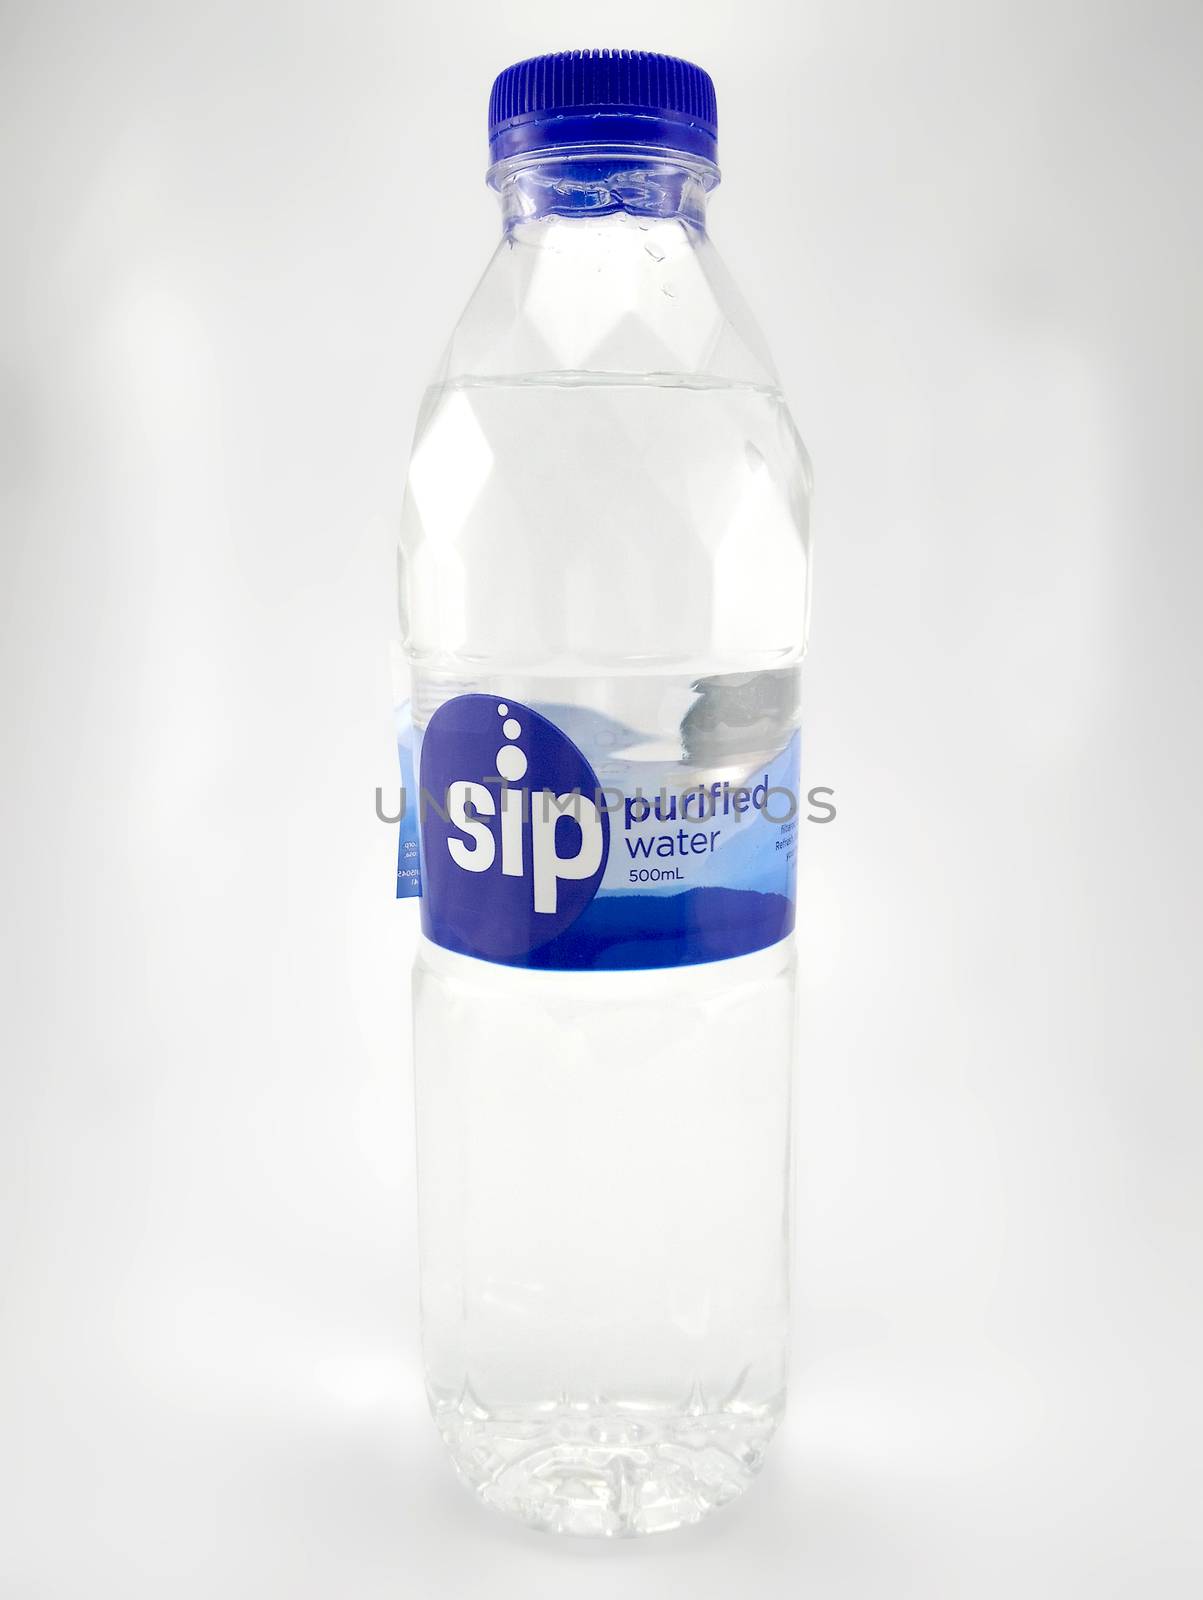 MANILA, PH - JUNE 23 - Sip purified water bottle on June 23, 2020 in Manila, Philippines.